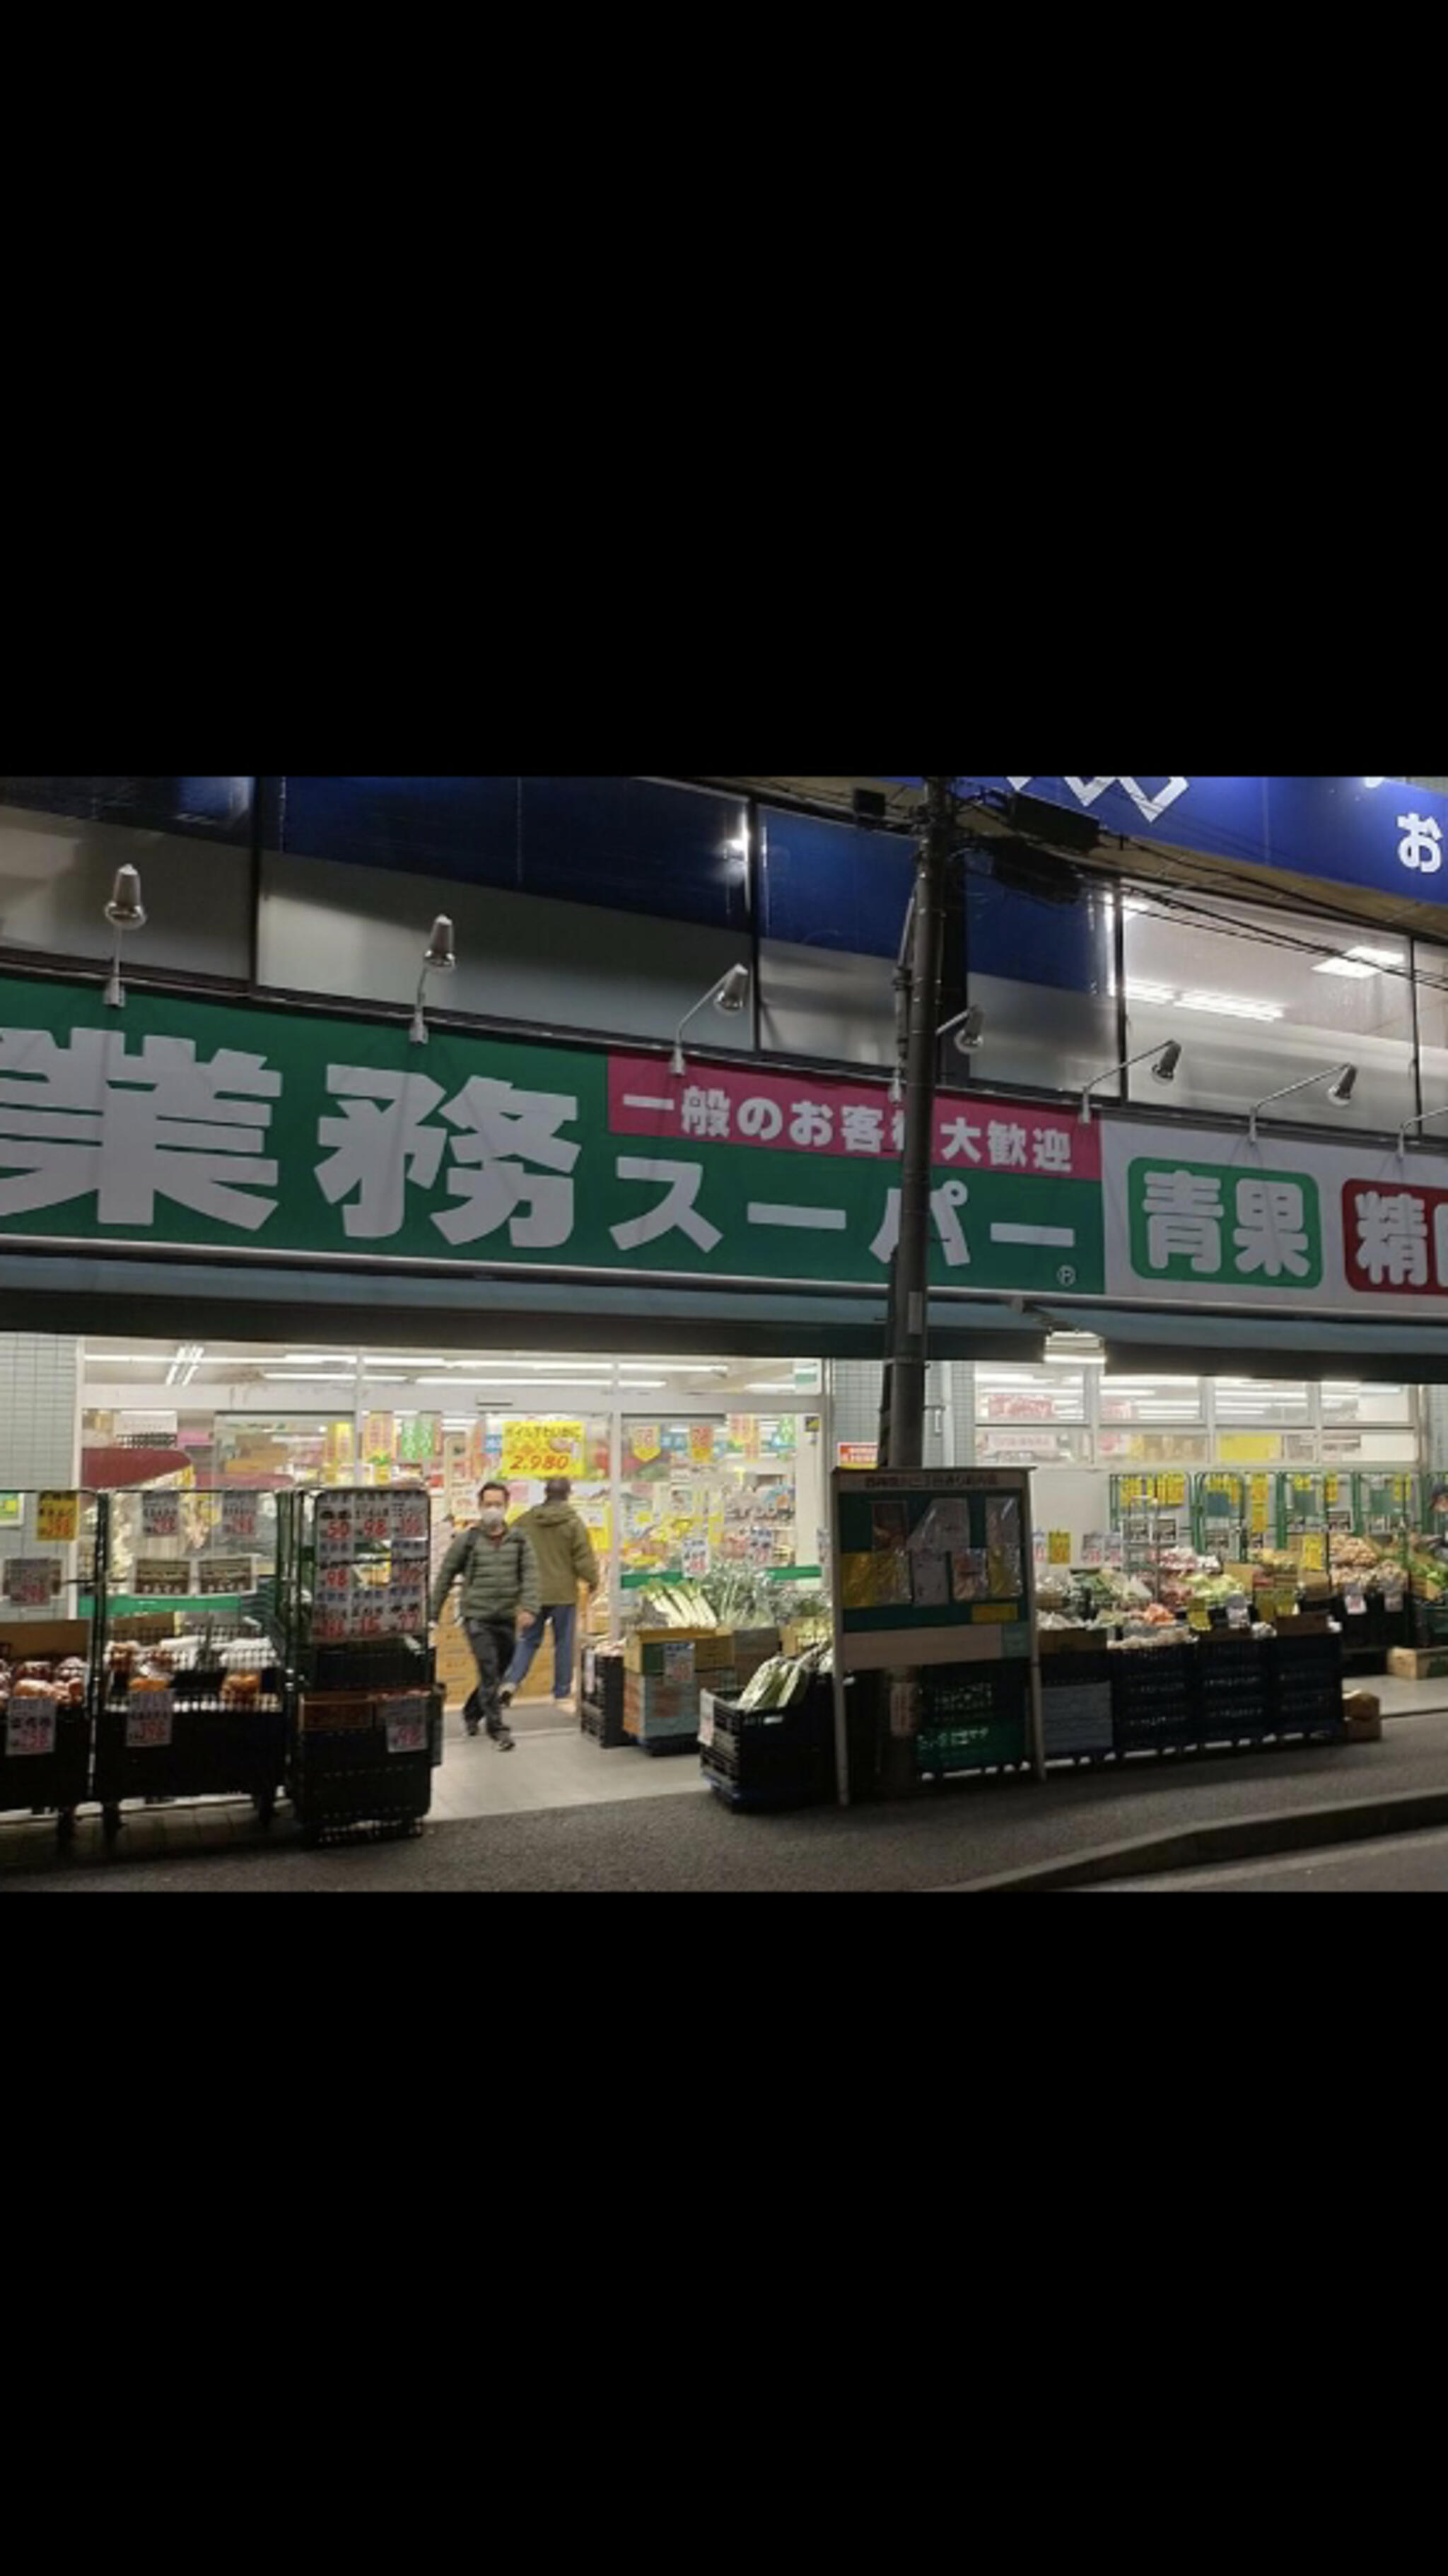 業務スーパー 六角橋店の代表写真7